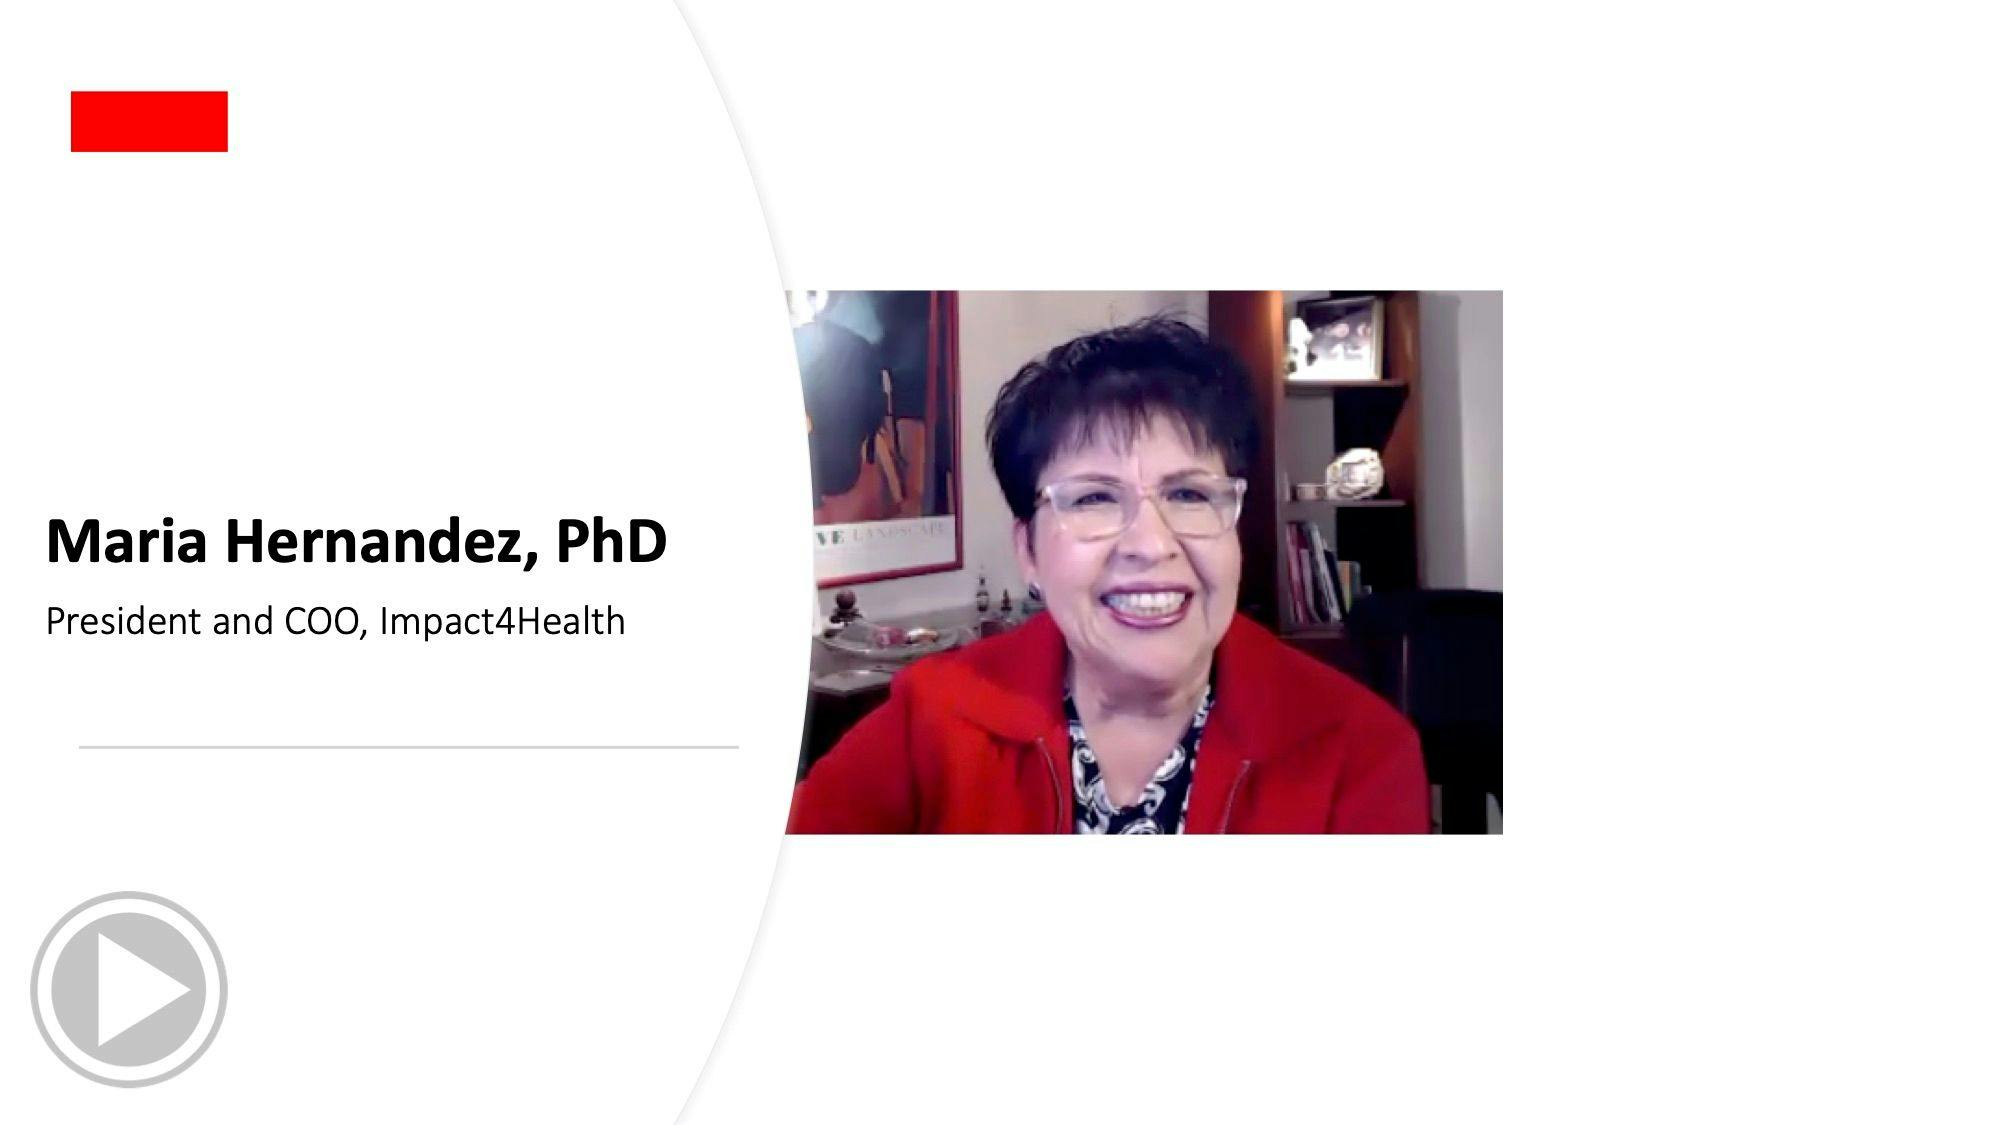 Maria Hernandez, PhD, gives expert advice